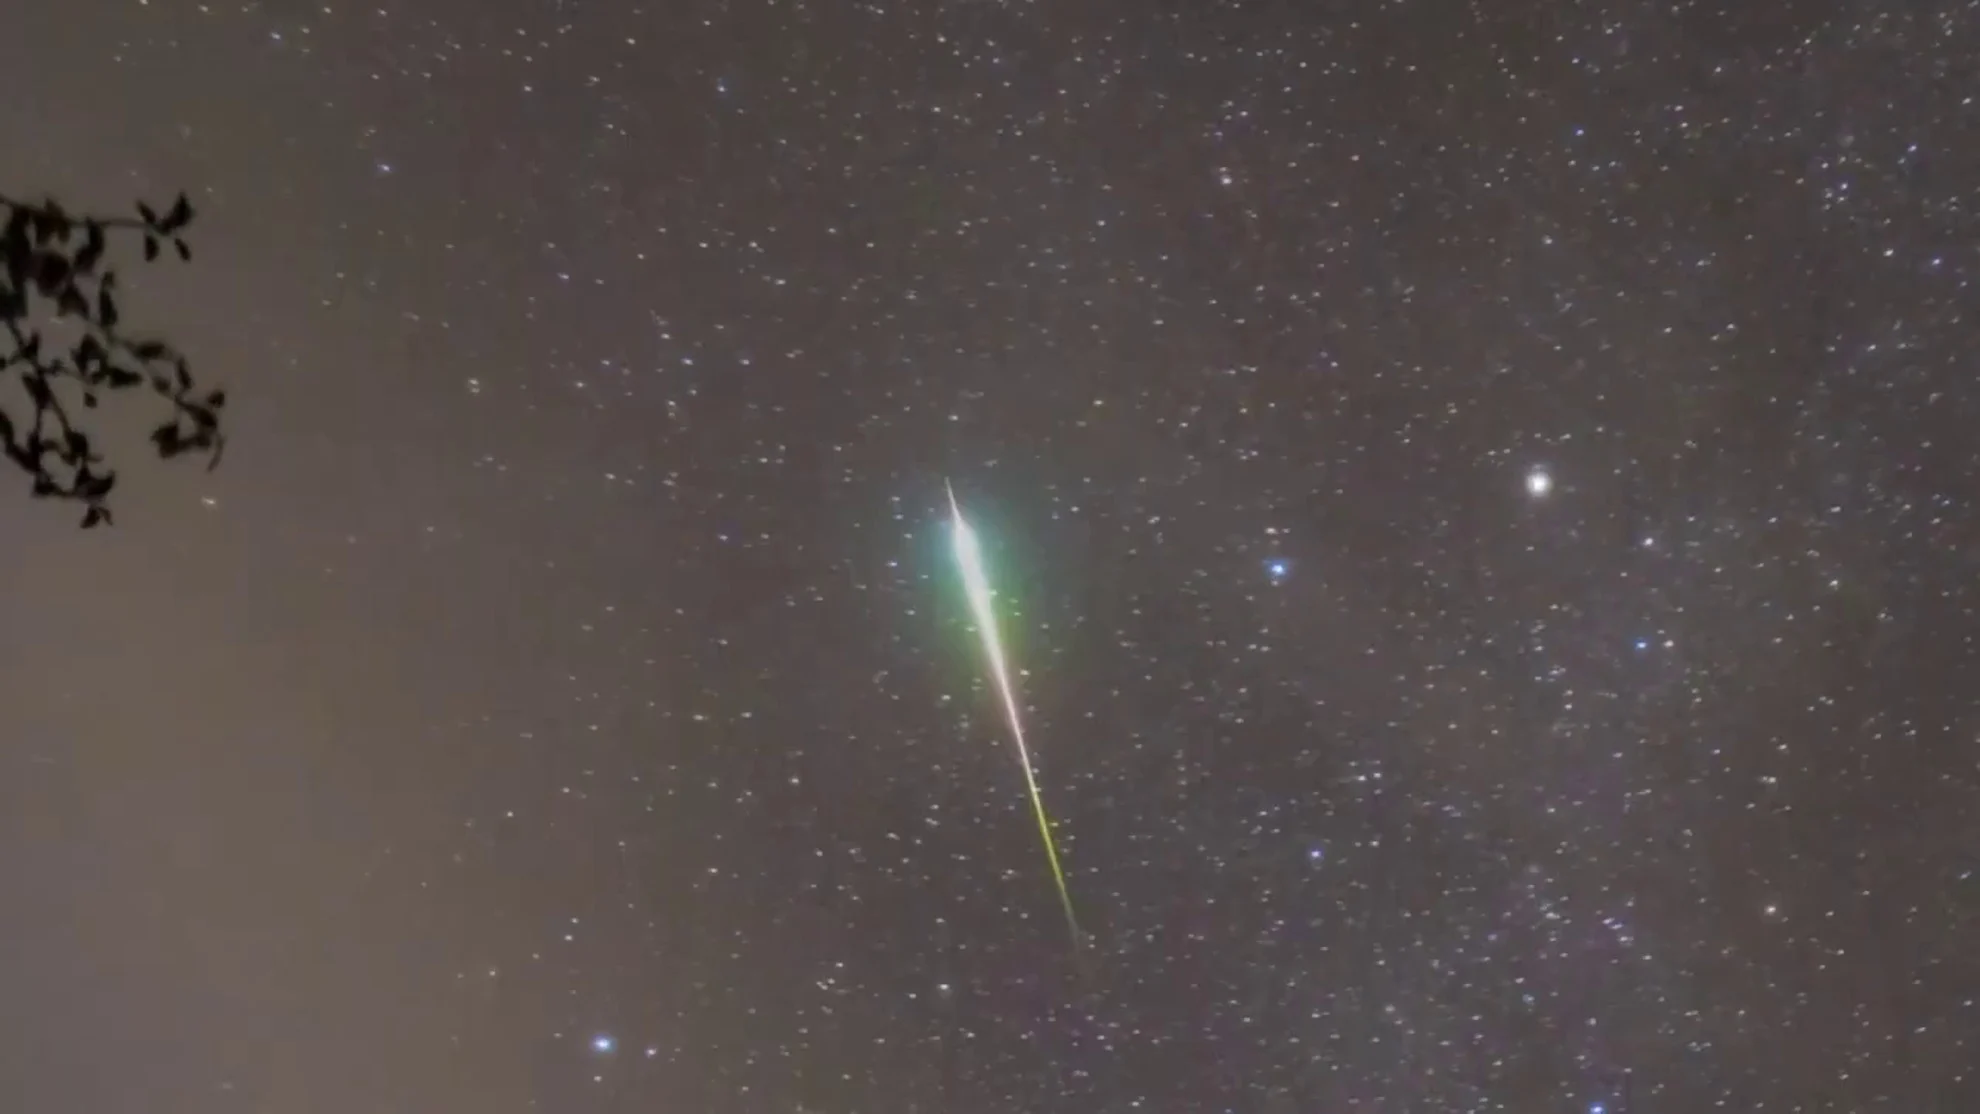 Watch for Halley's Comet meteors streaking through the night sky